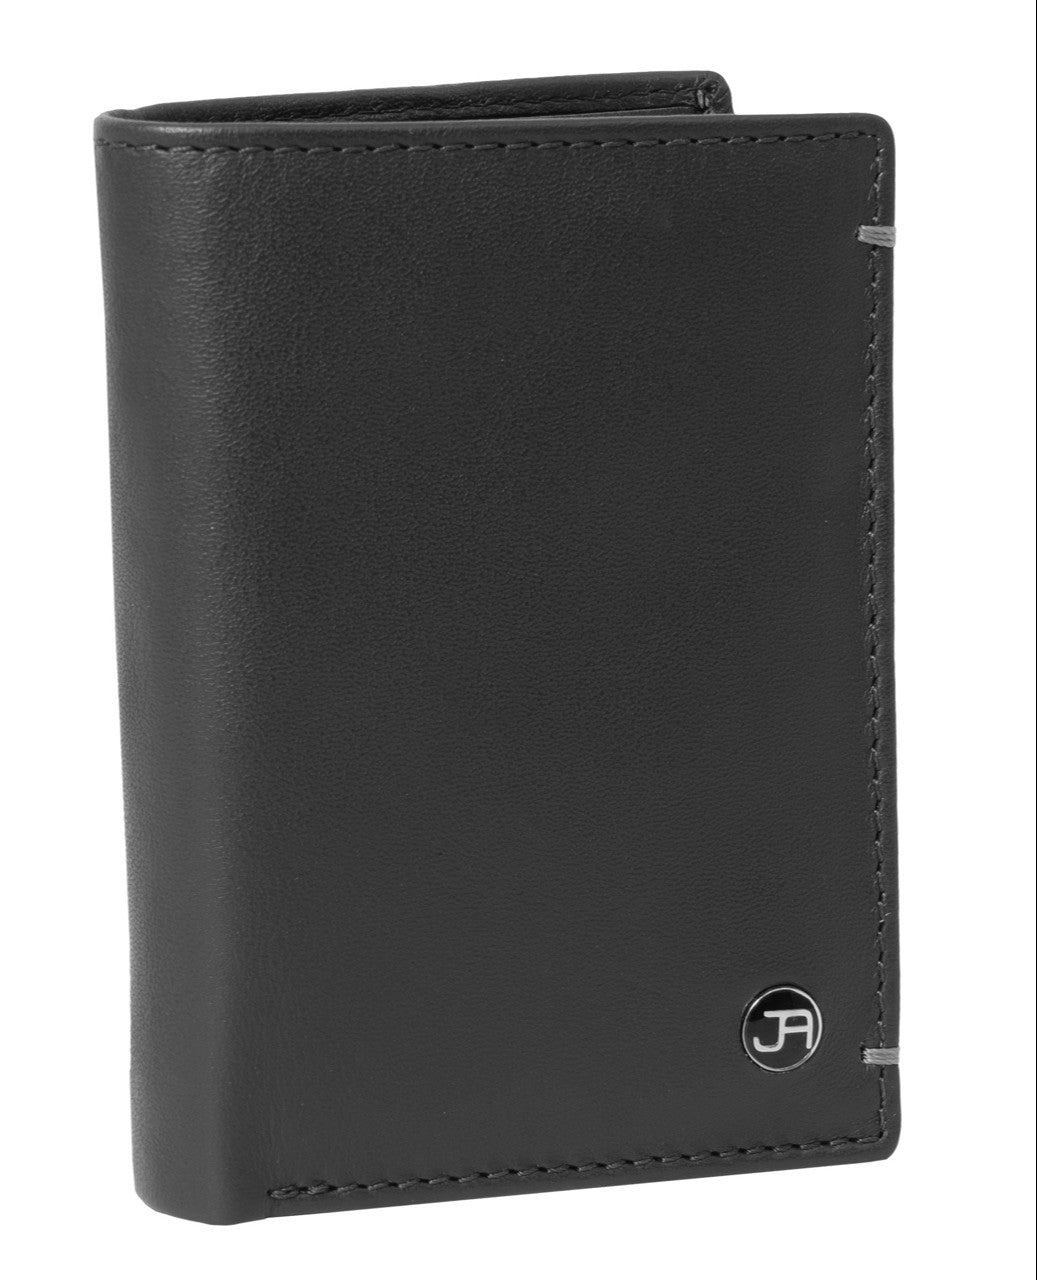 title:Jack Abrahams Bi-Fold RFID Minimalist Wallet With Zipper Pocket;color:Black